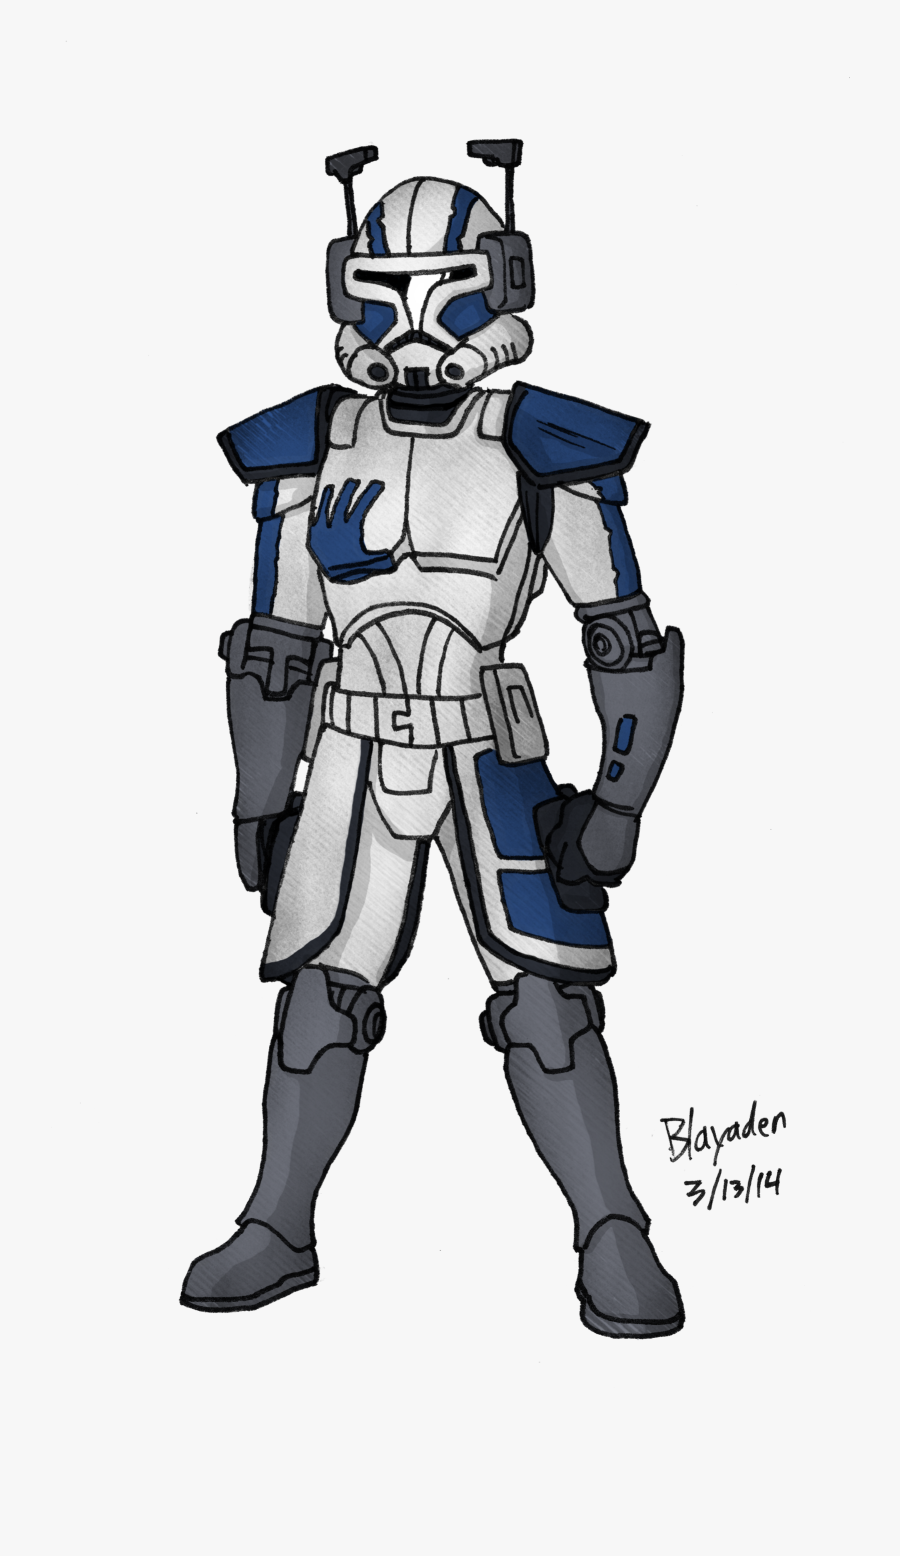 Drawn Star Wars Commander Cody - Starwars Clone Wars Echo Alive, Transparent Clipart